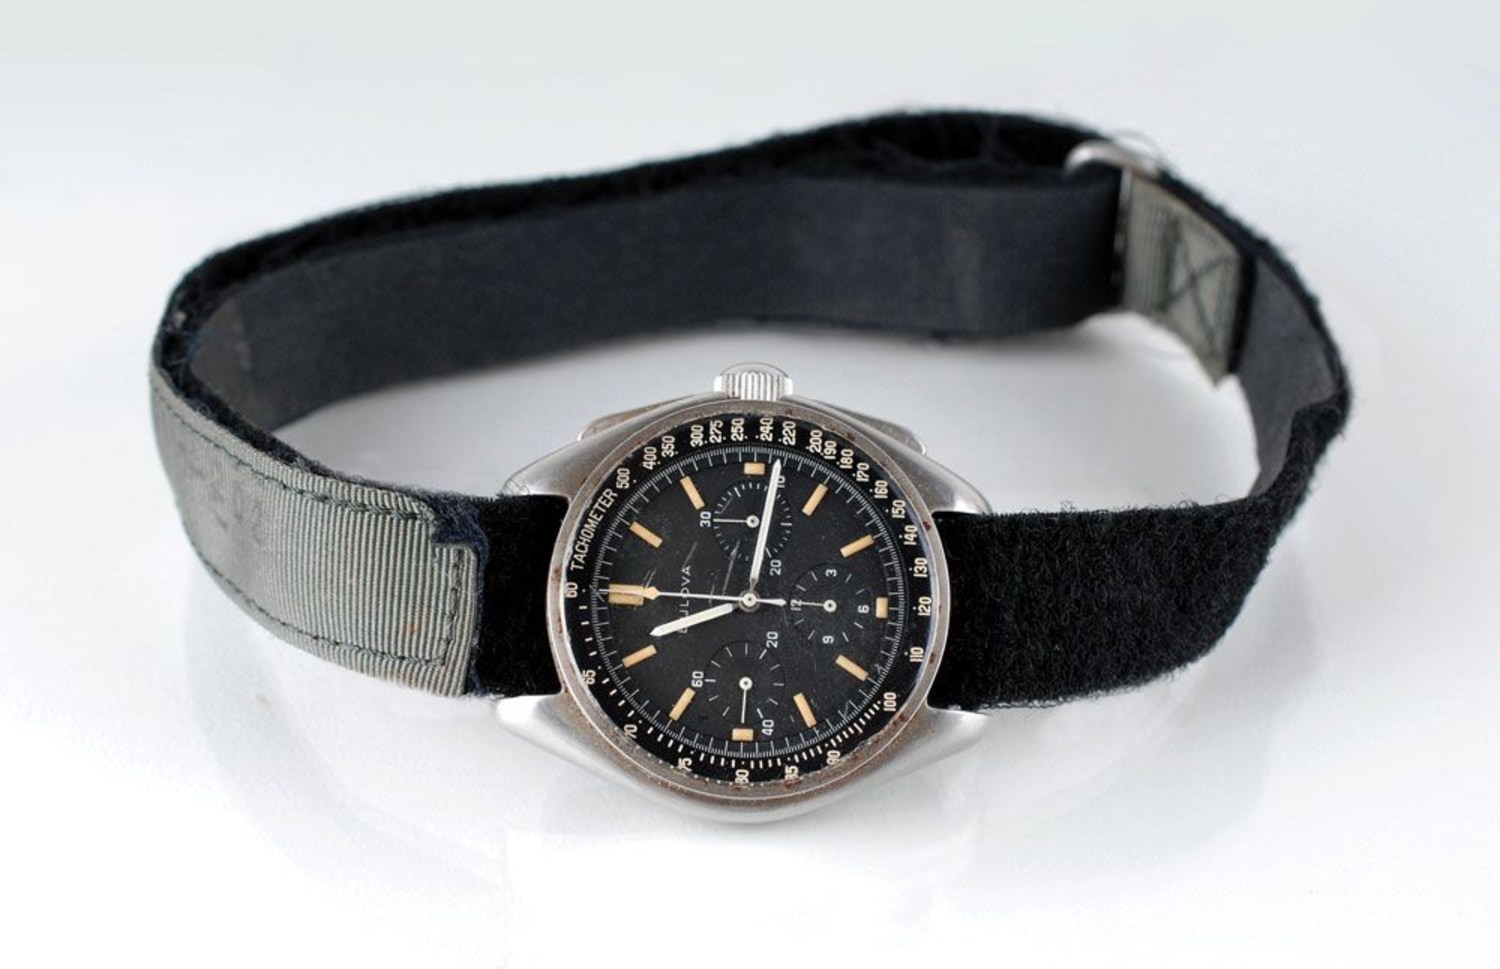 titanium watch with real moon dust from meteorite recalls NASA's apollo 11  landing